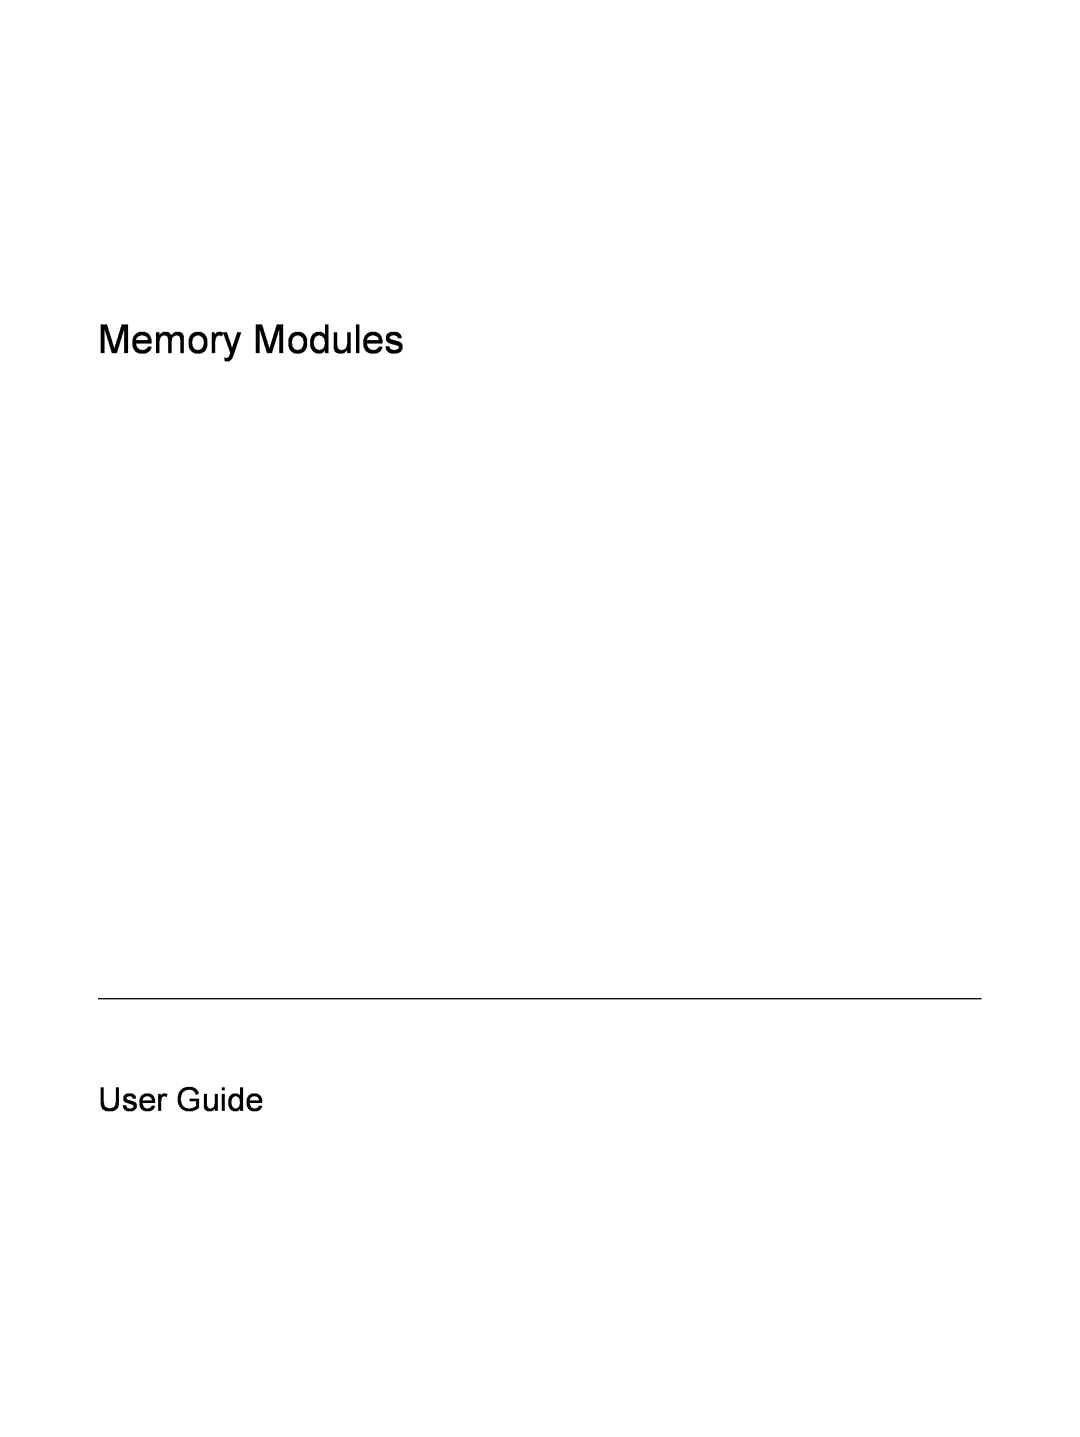 HP V3419TU, V3420AU, V3422AU, V3416TX, V3413TX, V3415LA, V3418LA, V3415TU, V3417LA, V3409AU manual Memory Modules, User Guide 